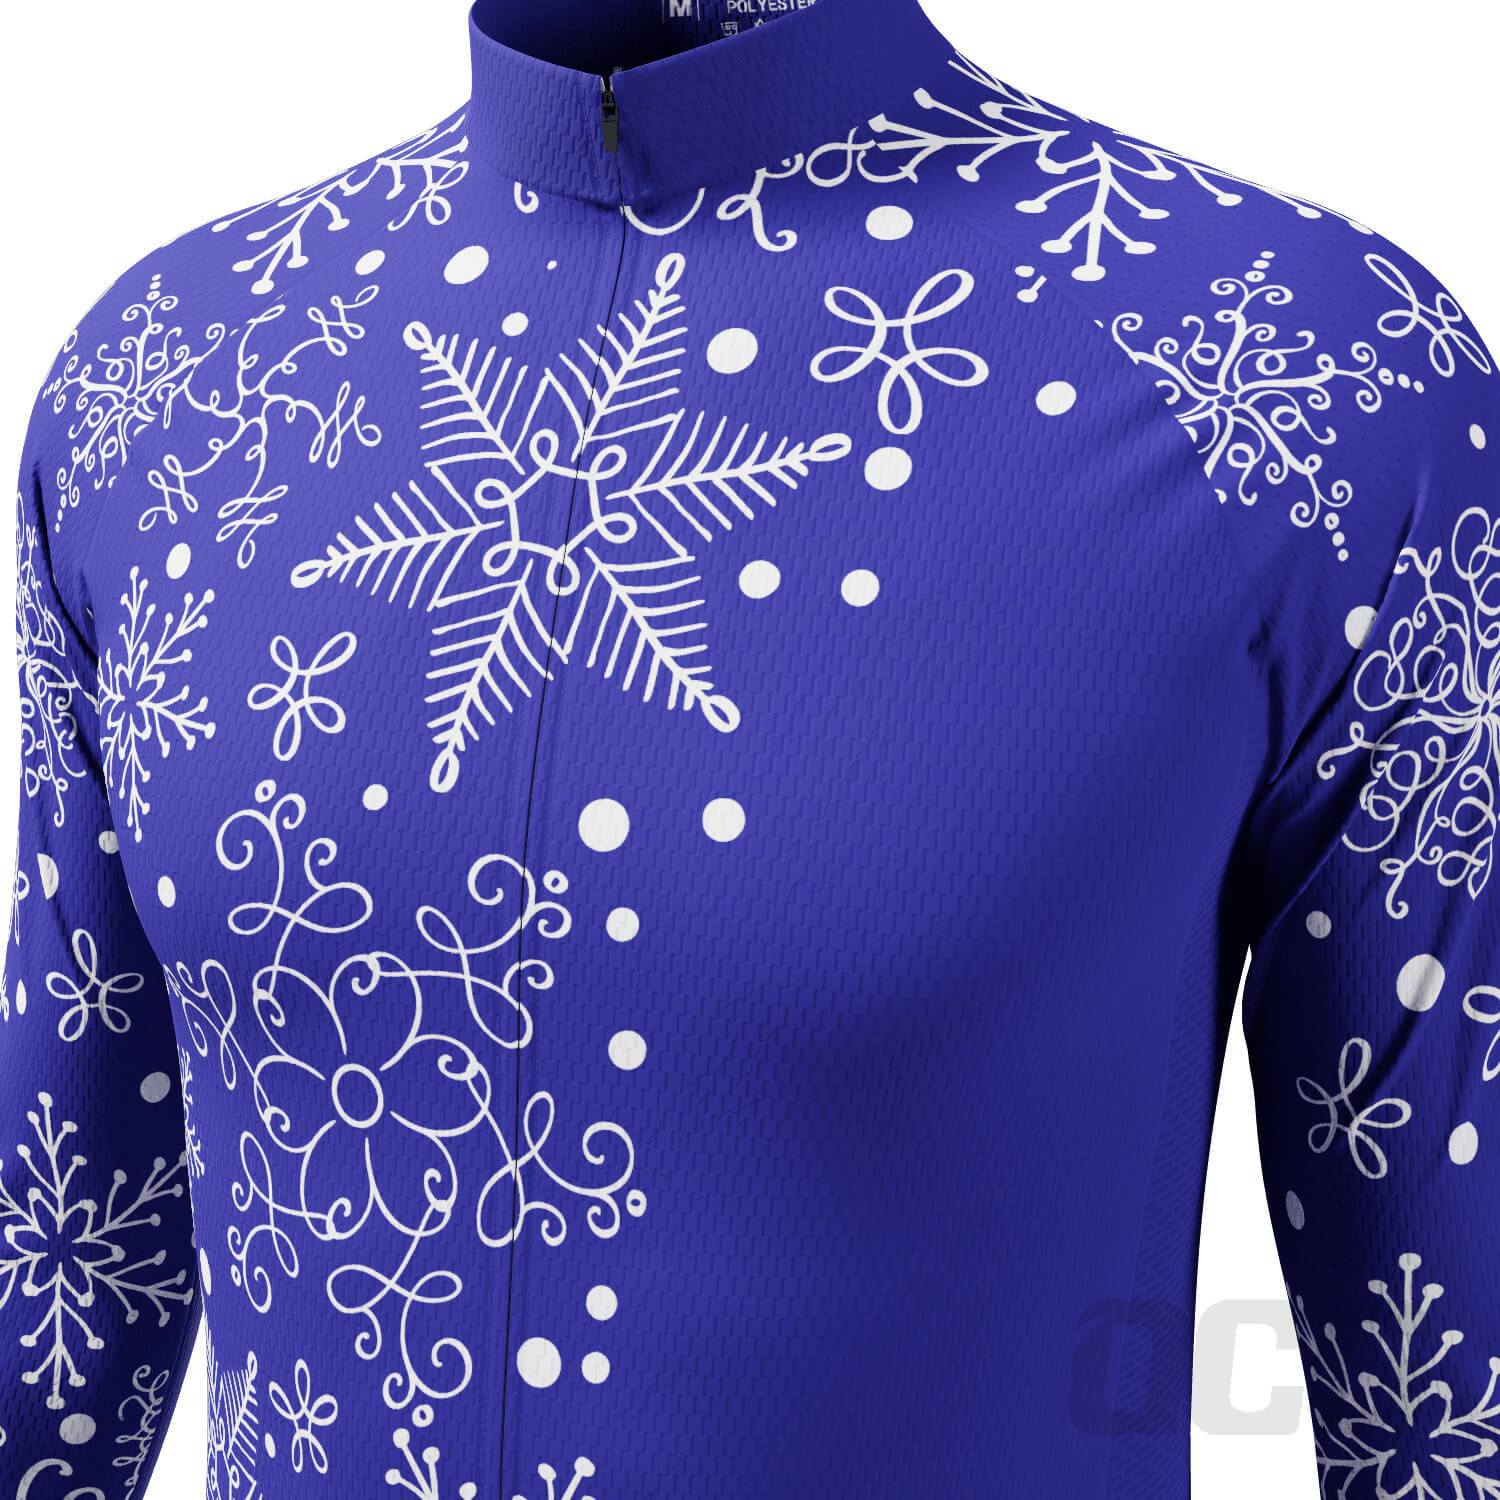 Men's Festive Snowflake Long Sleeve Cycling Jersey